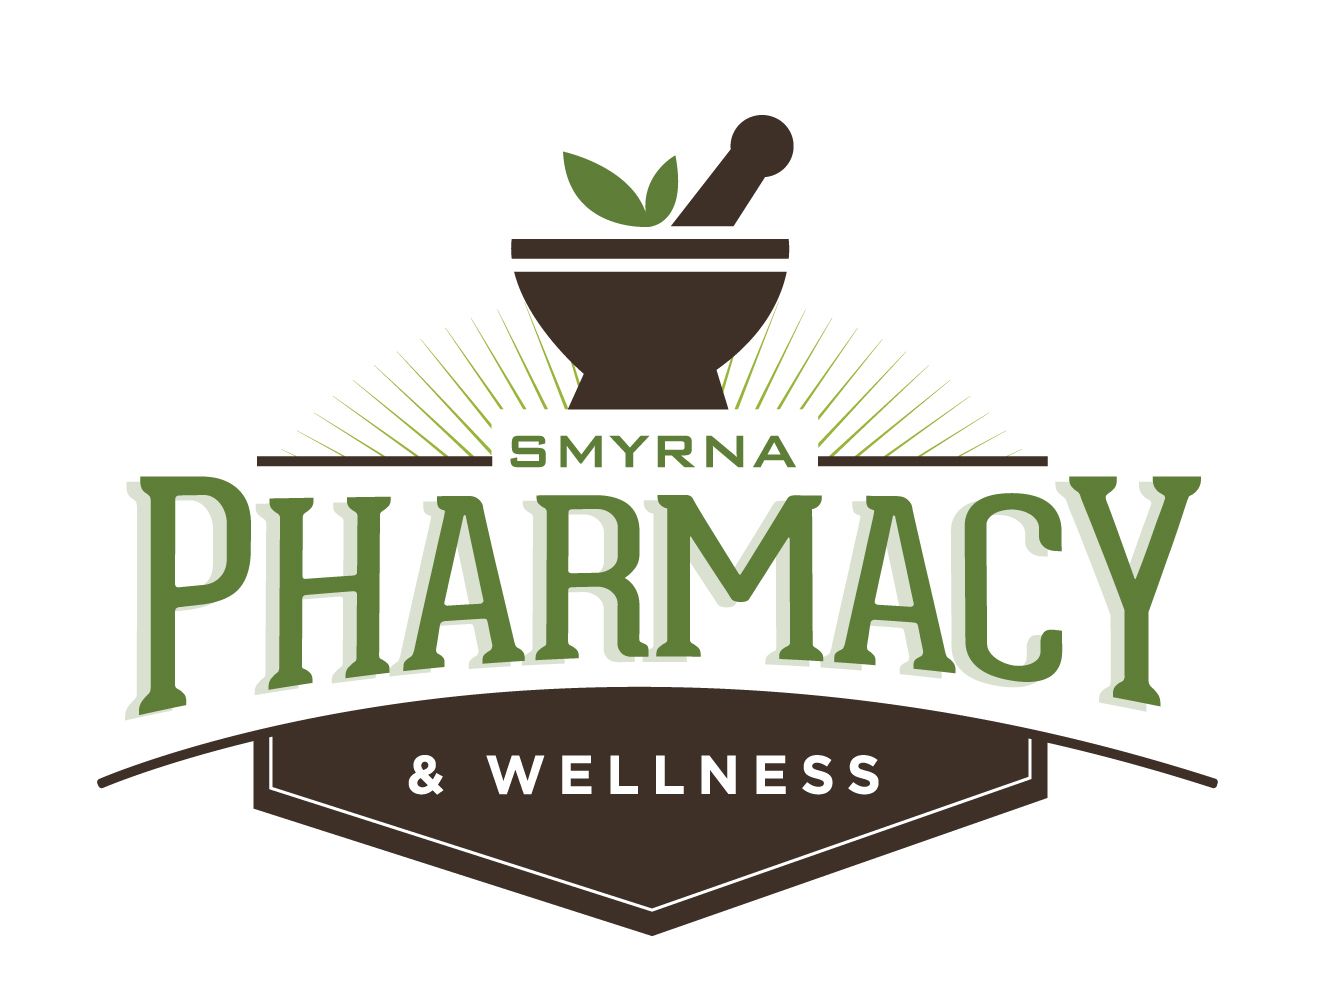 Smyrna Pharmacy and Wellness